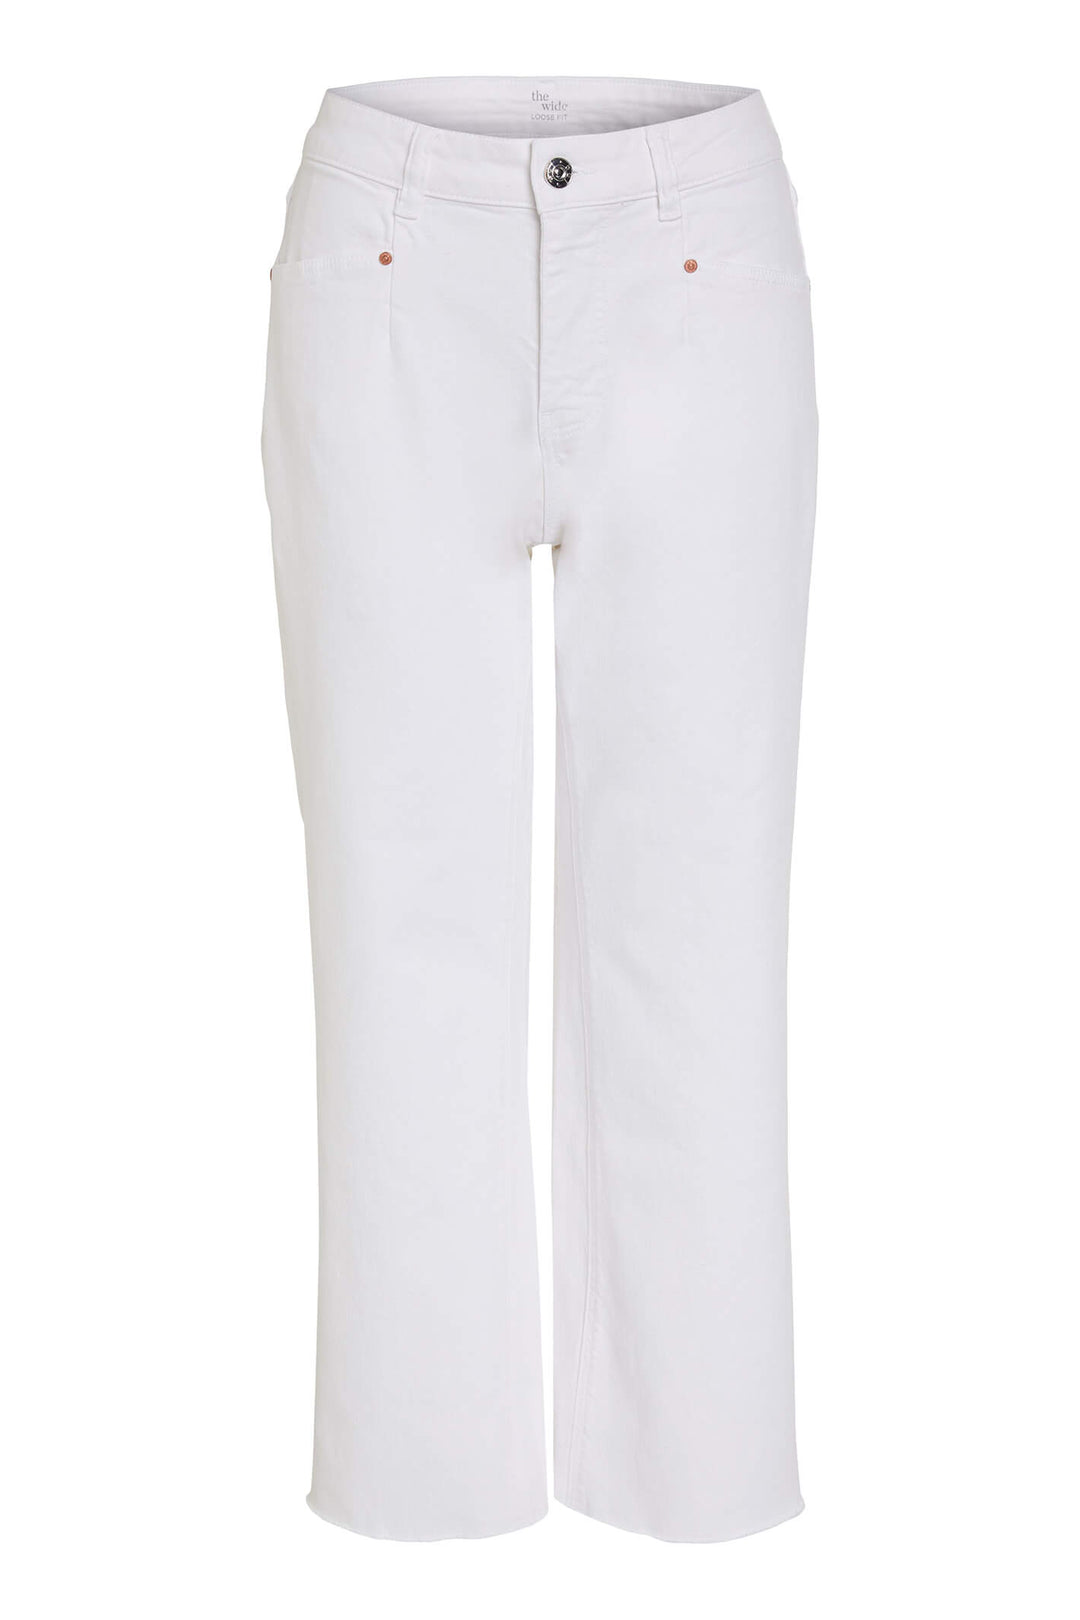 Oui 72490 White Cropped Raw Edge Flared Jeans - Olivia Grace Fashion